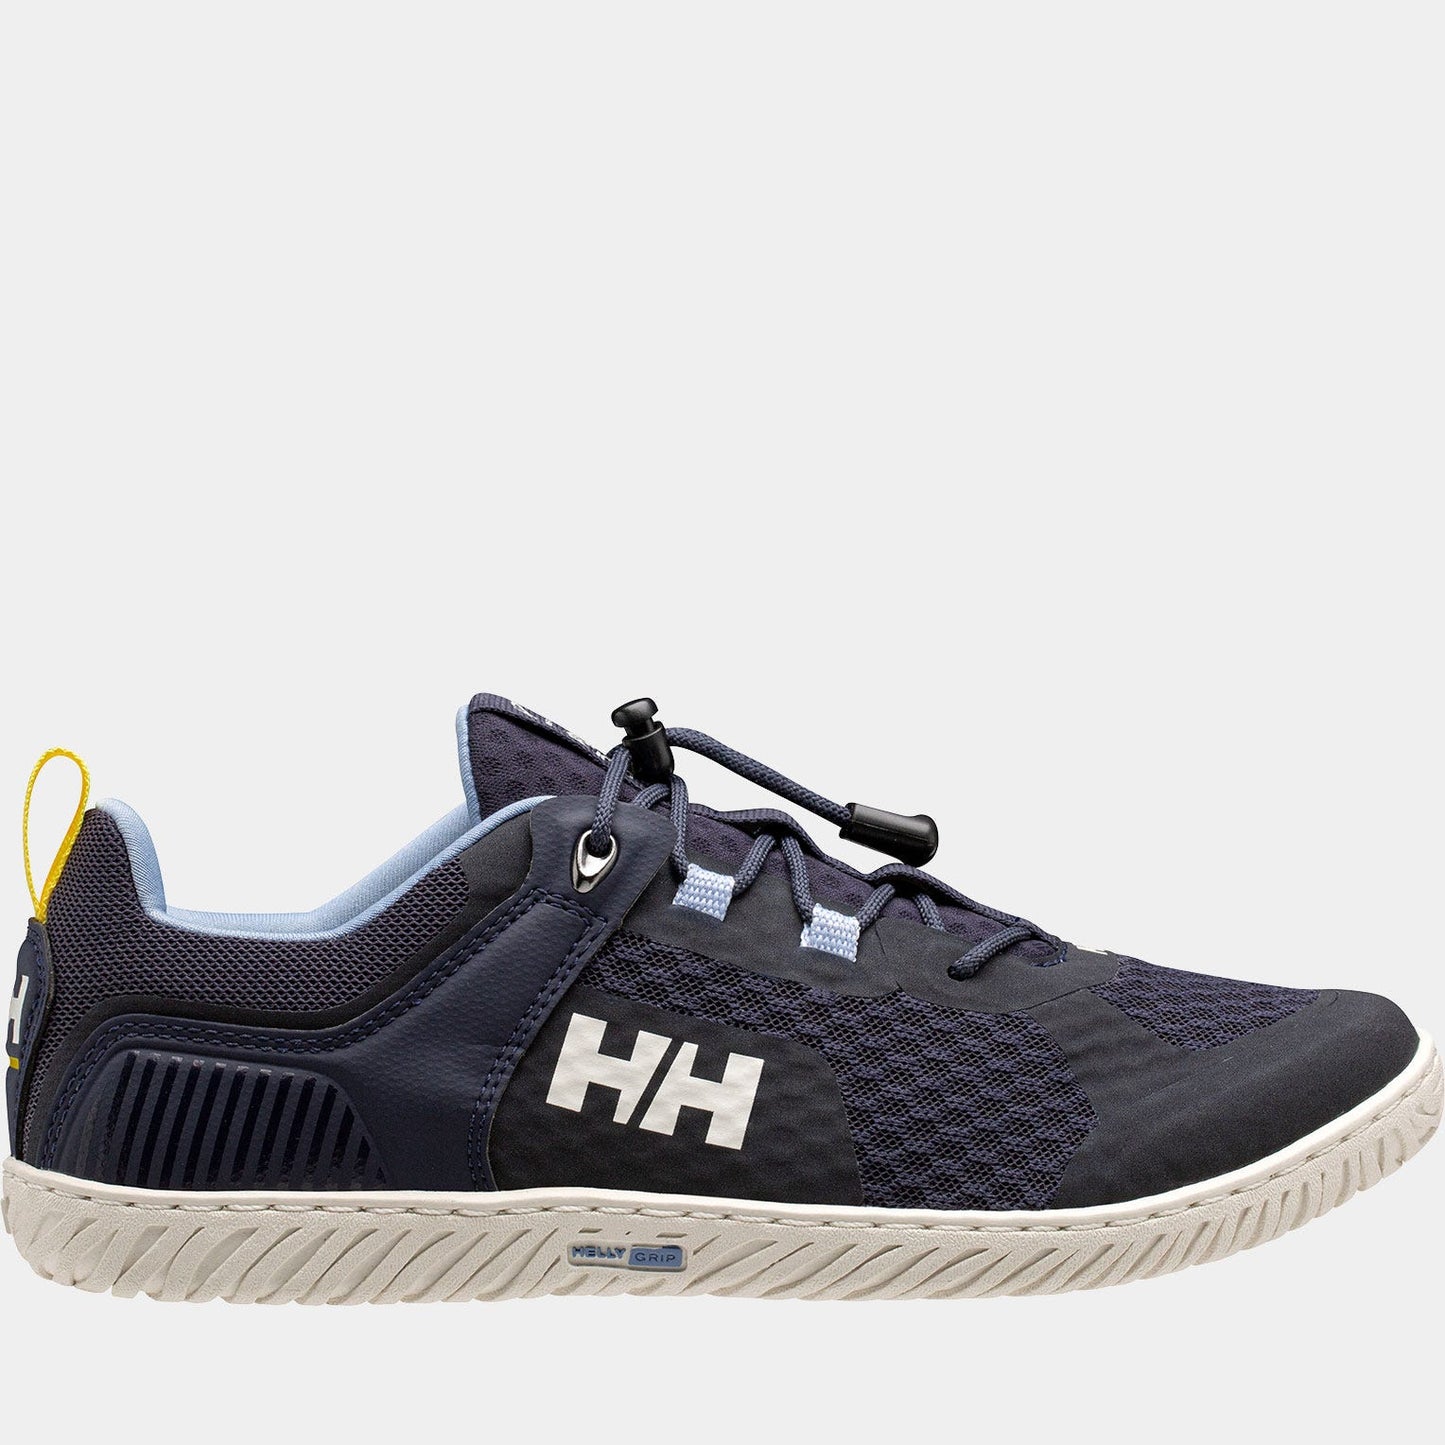 Helly Hansen Women's HP Foil V2 Sailing Shoes